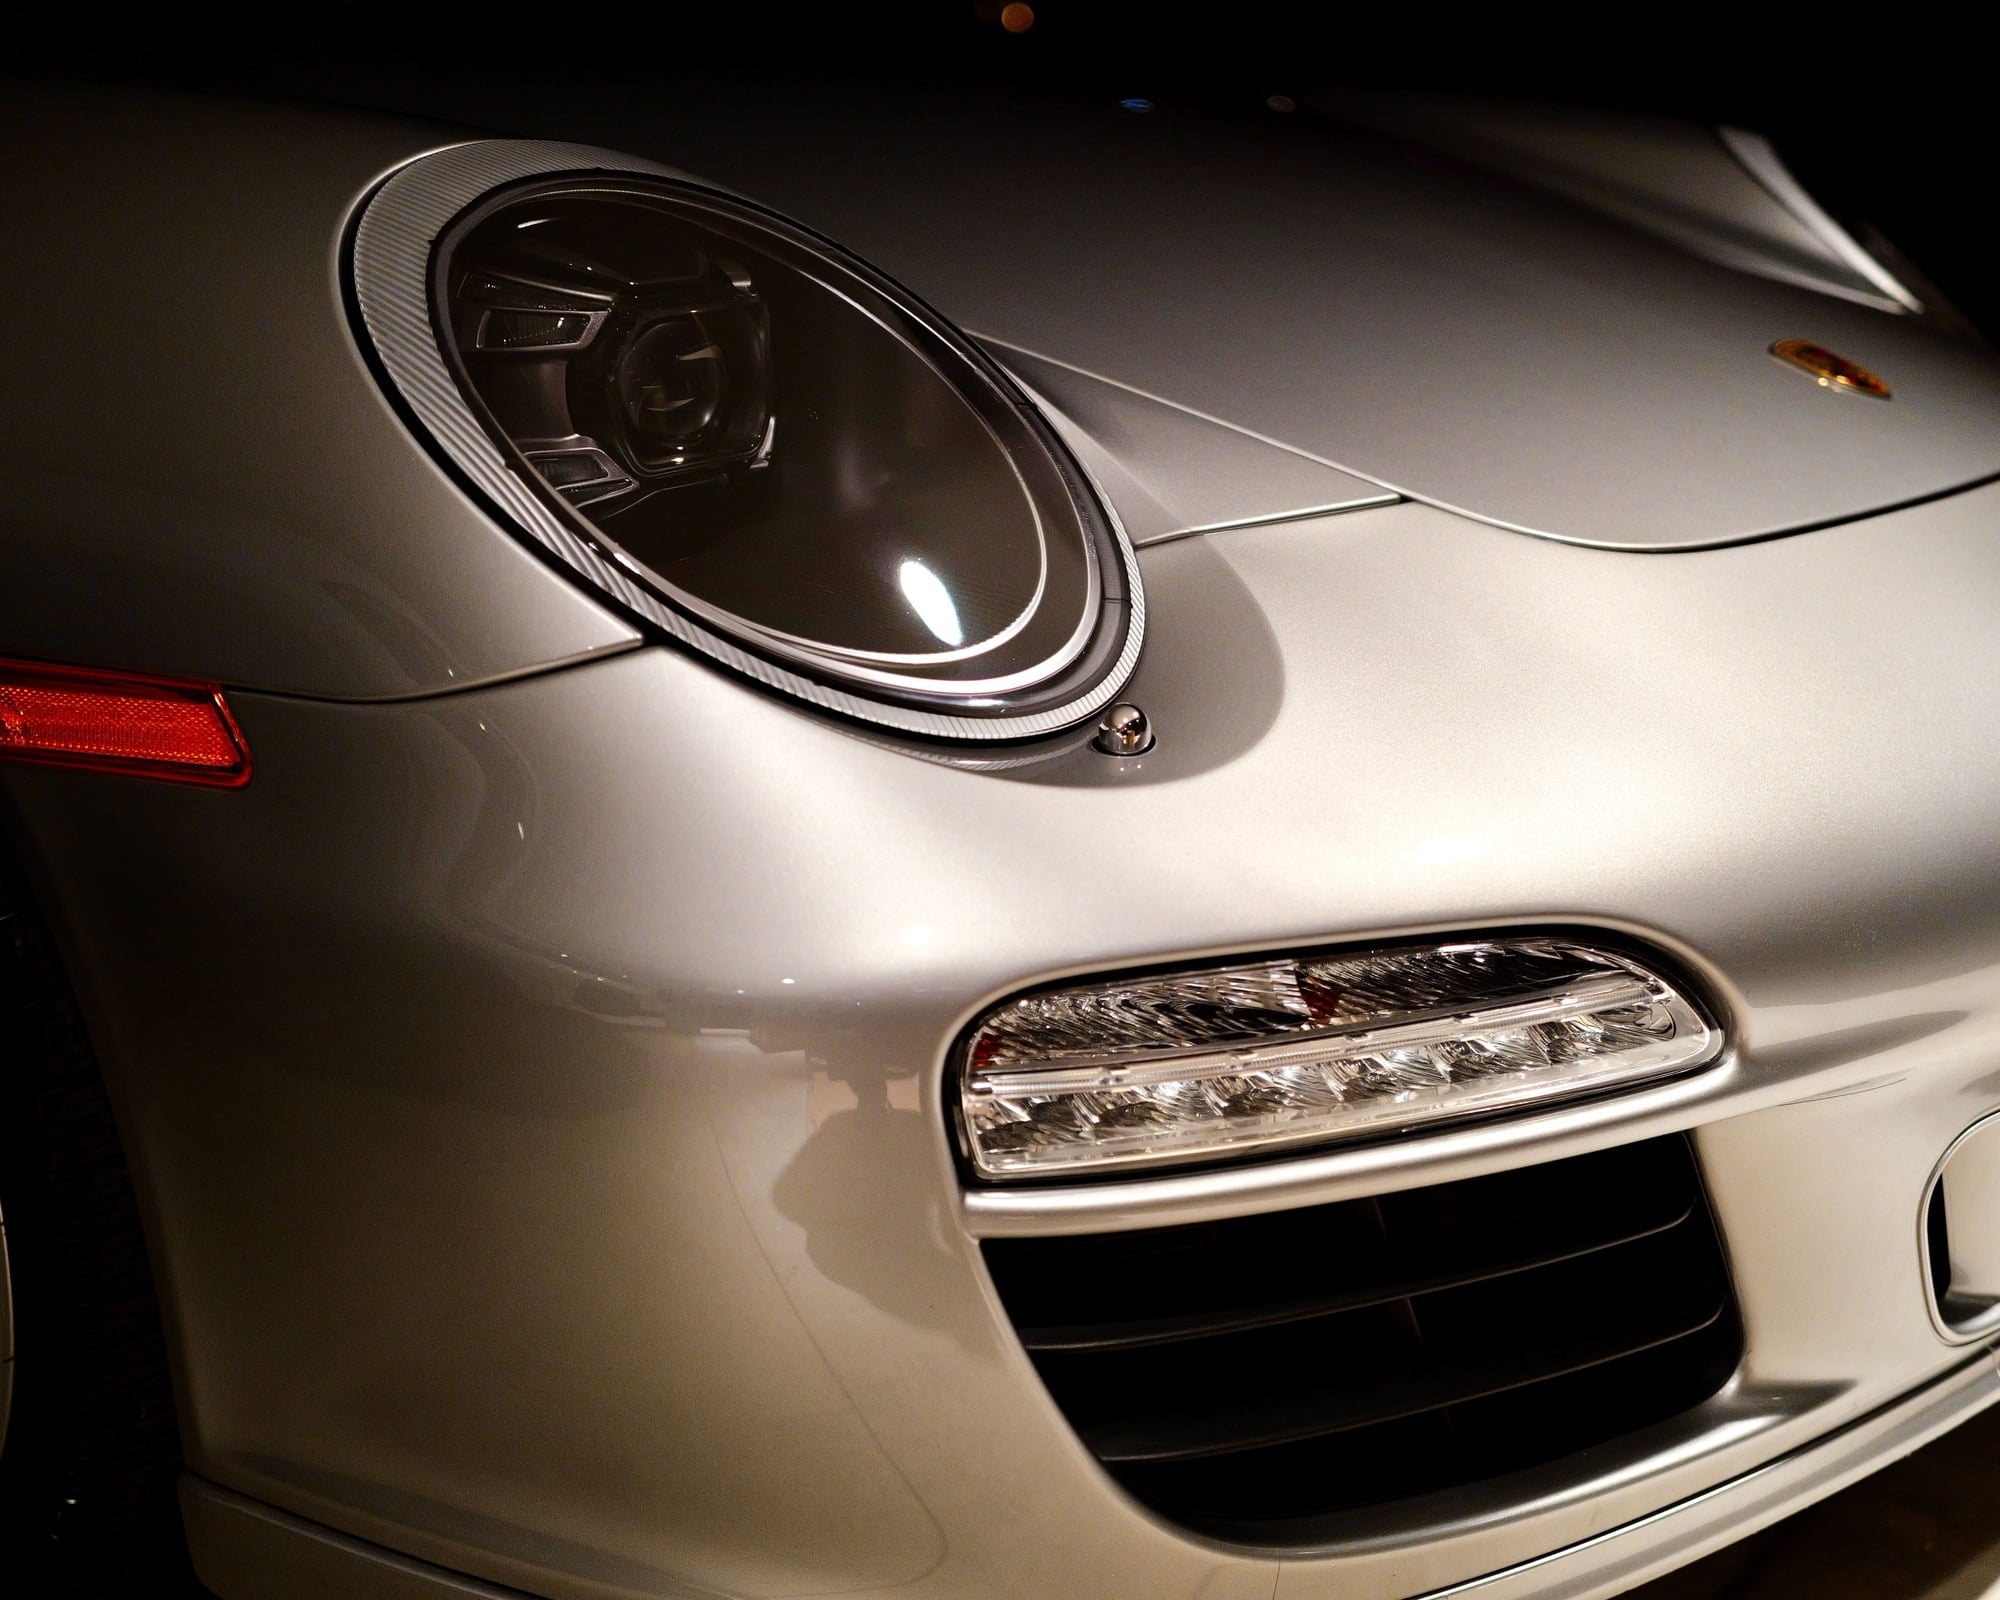 Lights - 997 Headlights - Full LED - 992 Style - Morimoto XB for 997.1 or 997.2 × 1 - Used - 2009 to 2012 Porsche 911 - Salt Lake City, UT 84102, United States